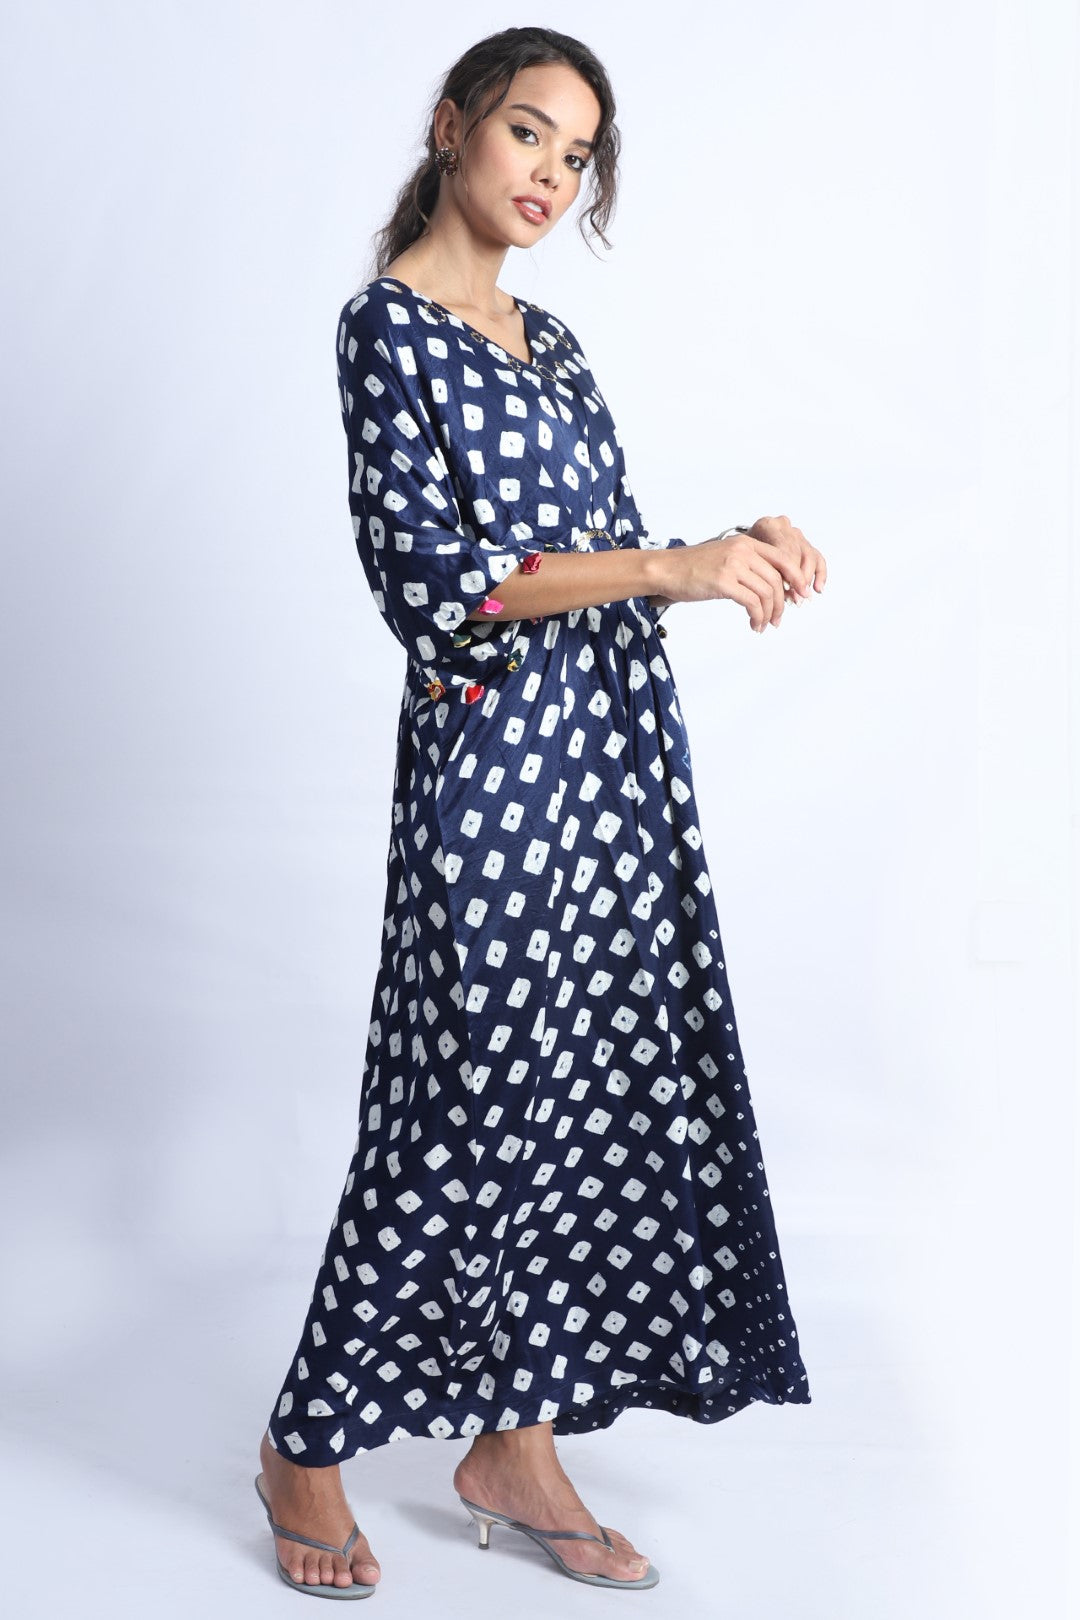 Indigo Blue Bandhani Silk Drape Dress